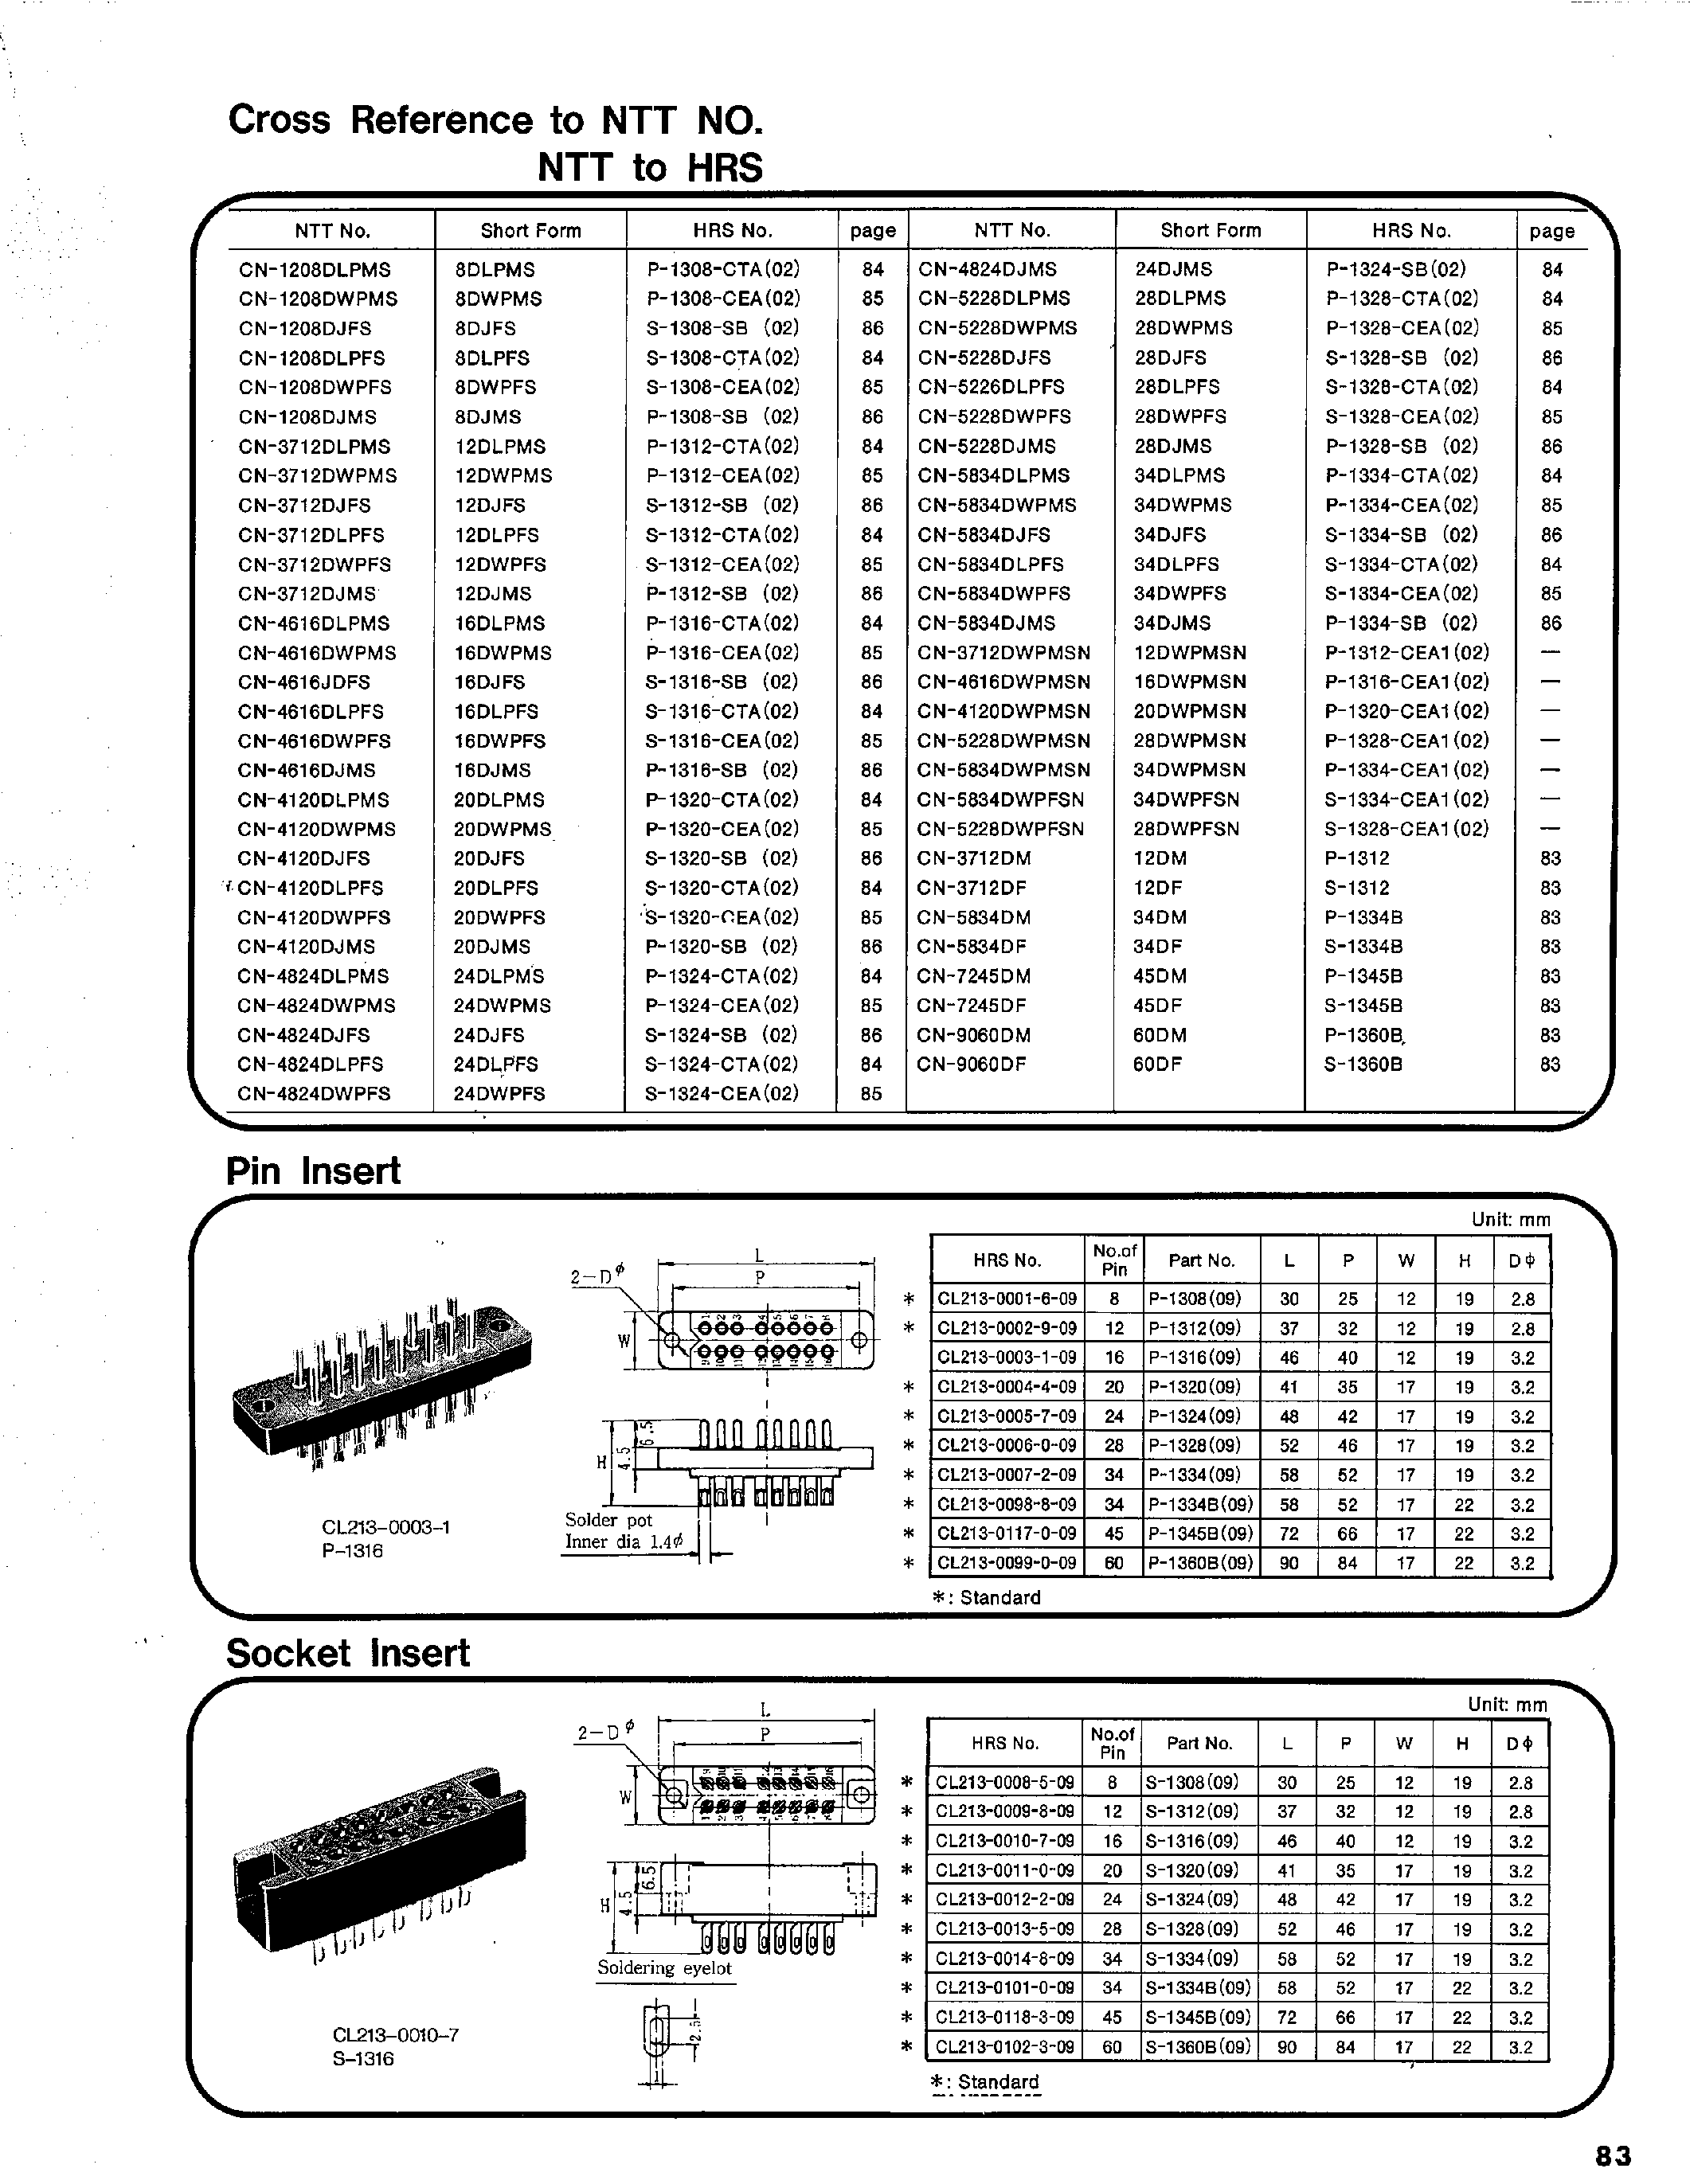 Datasheet P-1360-CE - 1300 SERIES RECTANGULAR CONNECTORS page 2